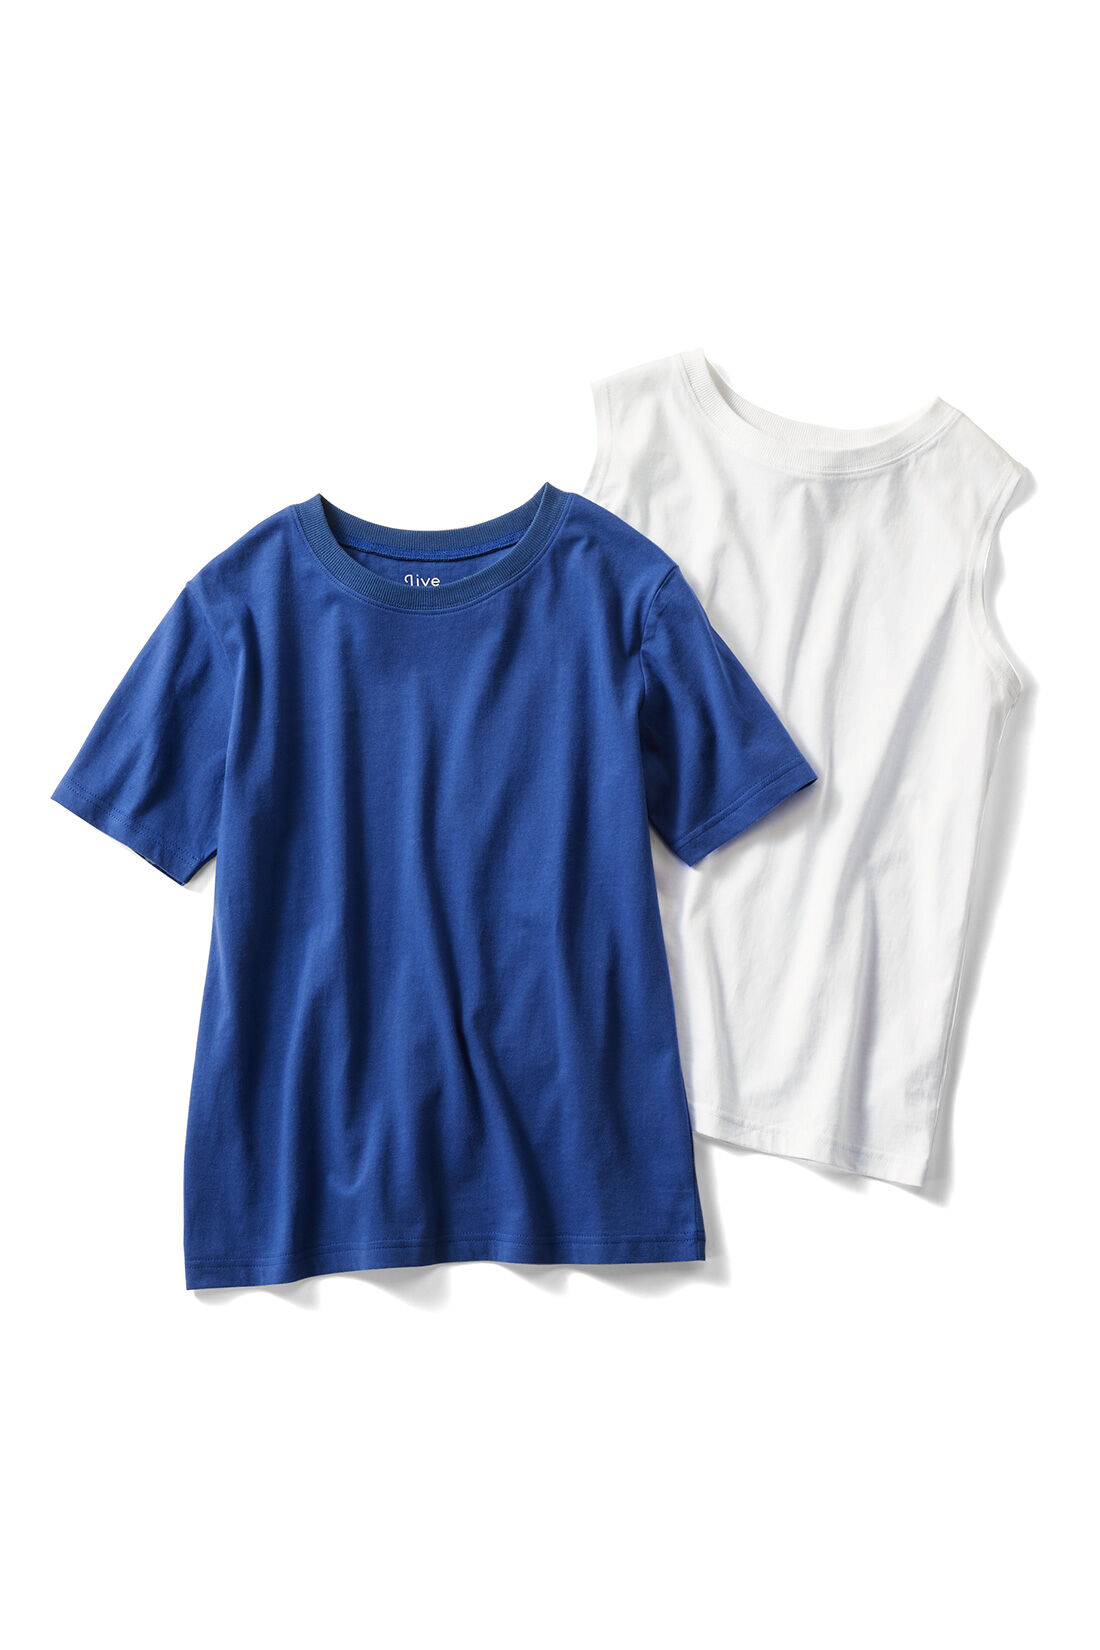 Live in  comfort|Live love cotton（R）プロジェクト リブ イン コンフォート きれいシルエットのパックTシャツ＆タンクトップセットの会|ホワイト＆ブルー